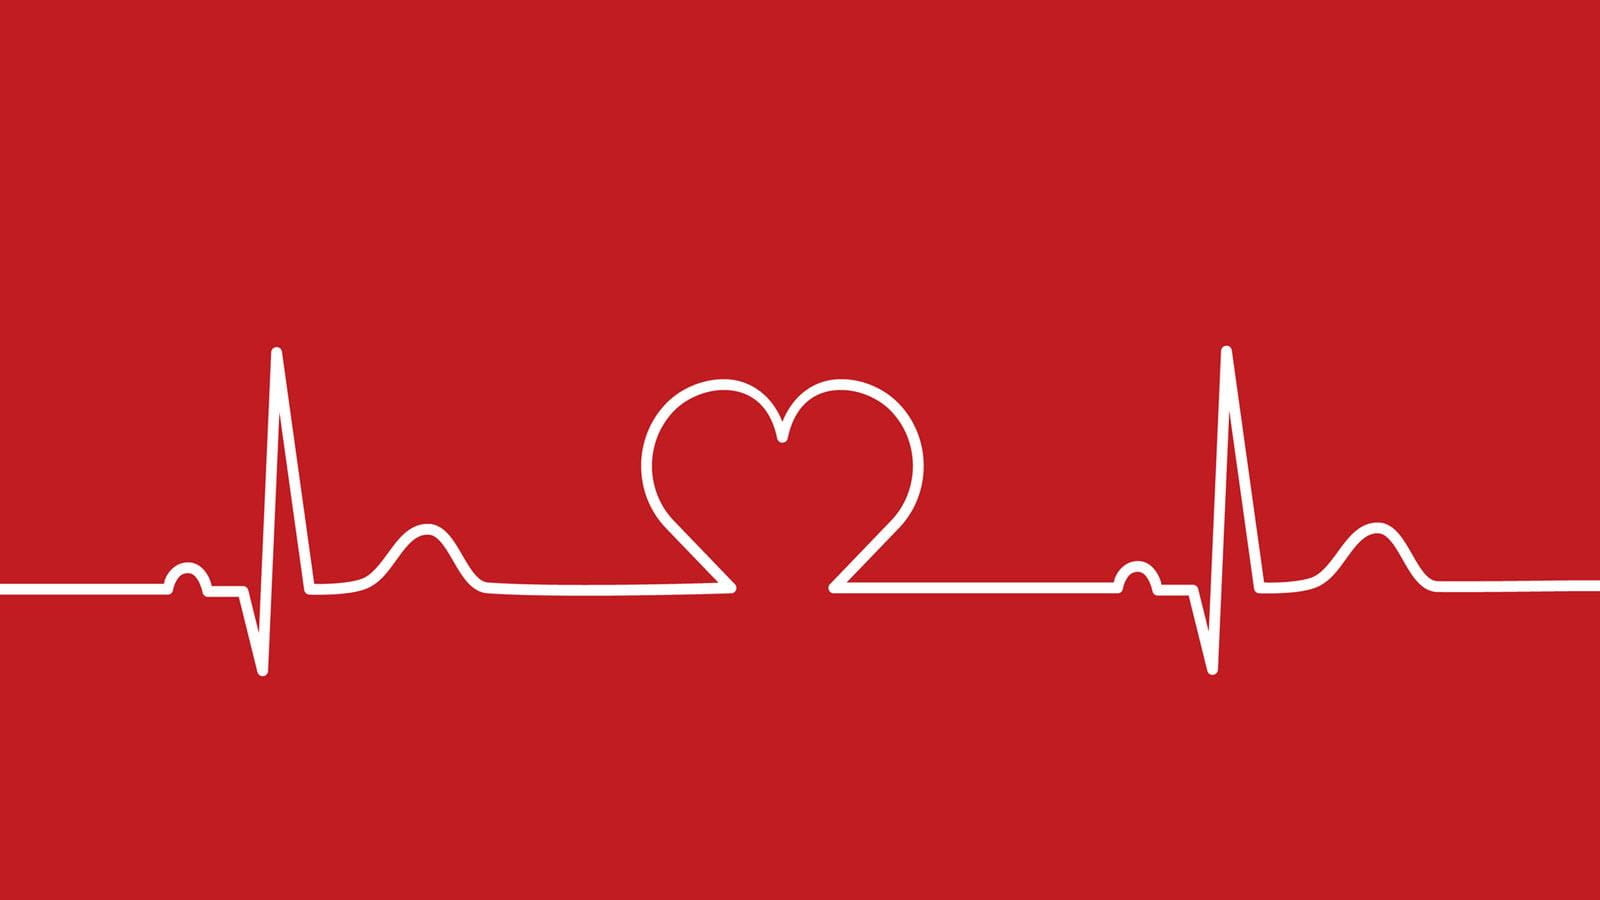 EKG reading in the shape of a heart